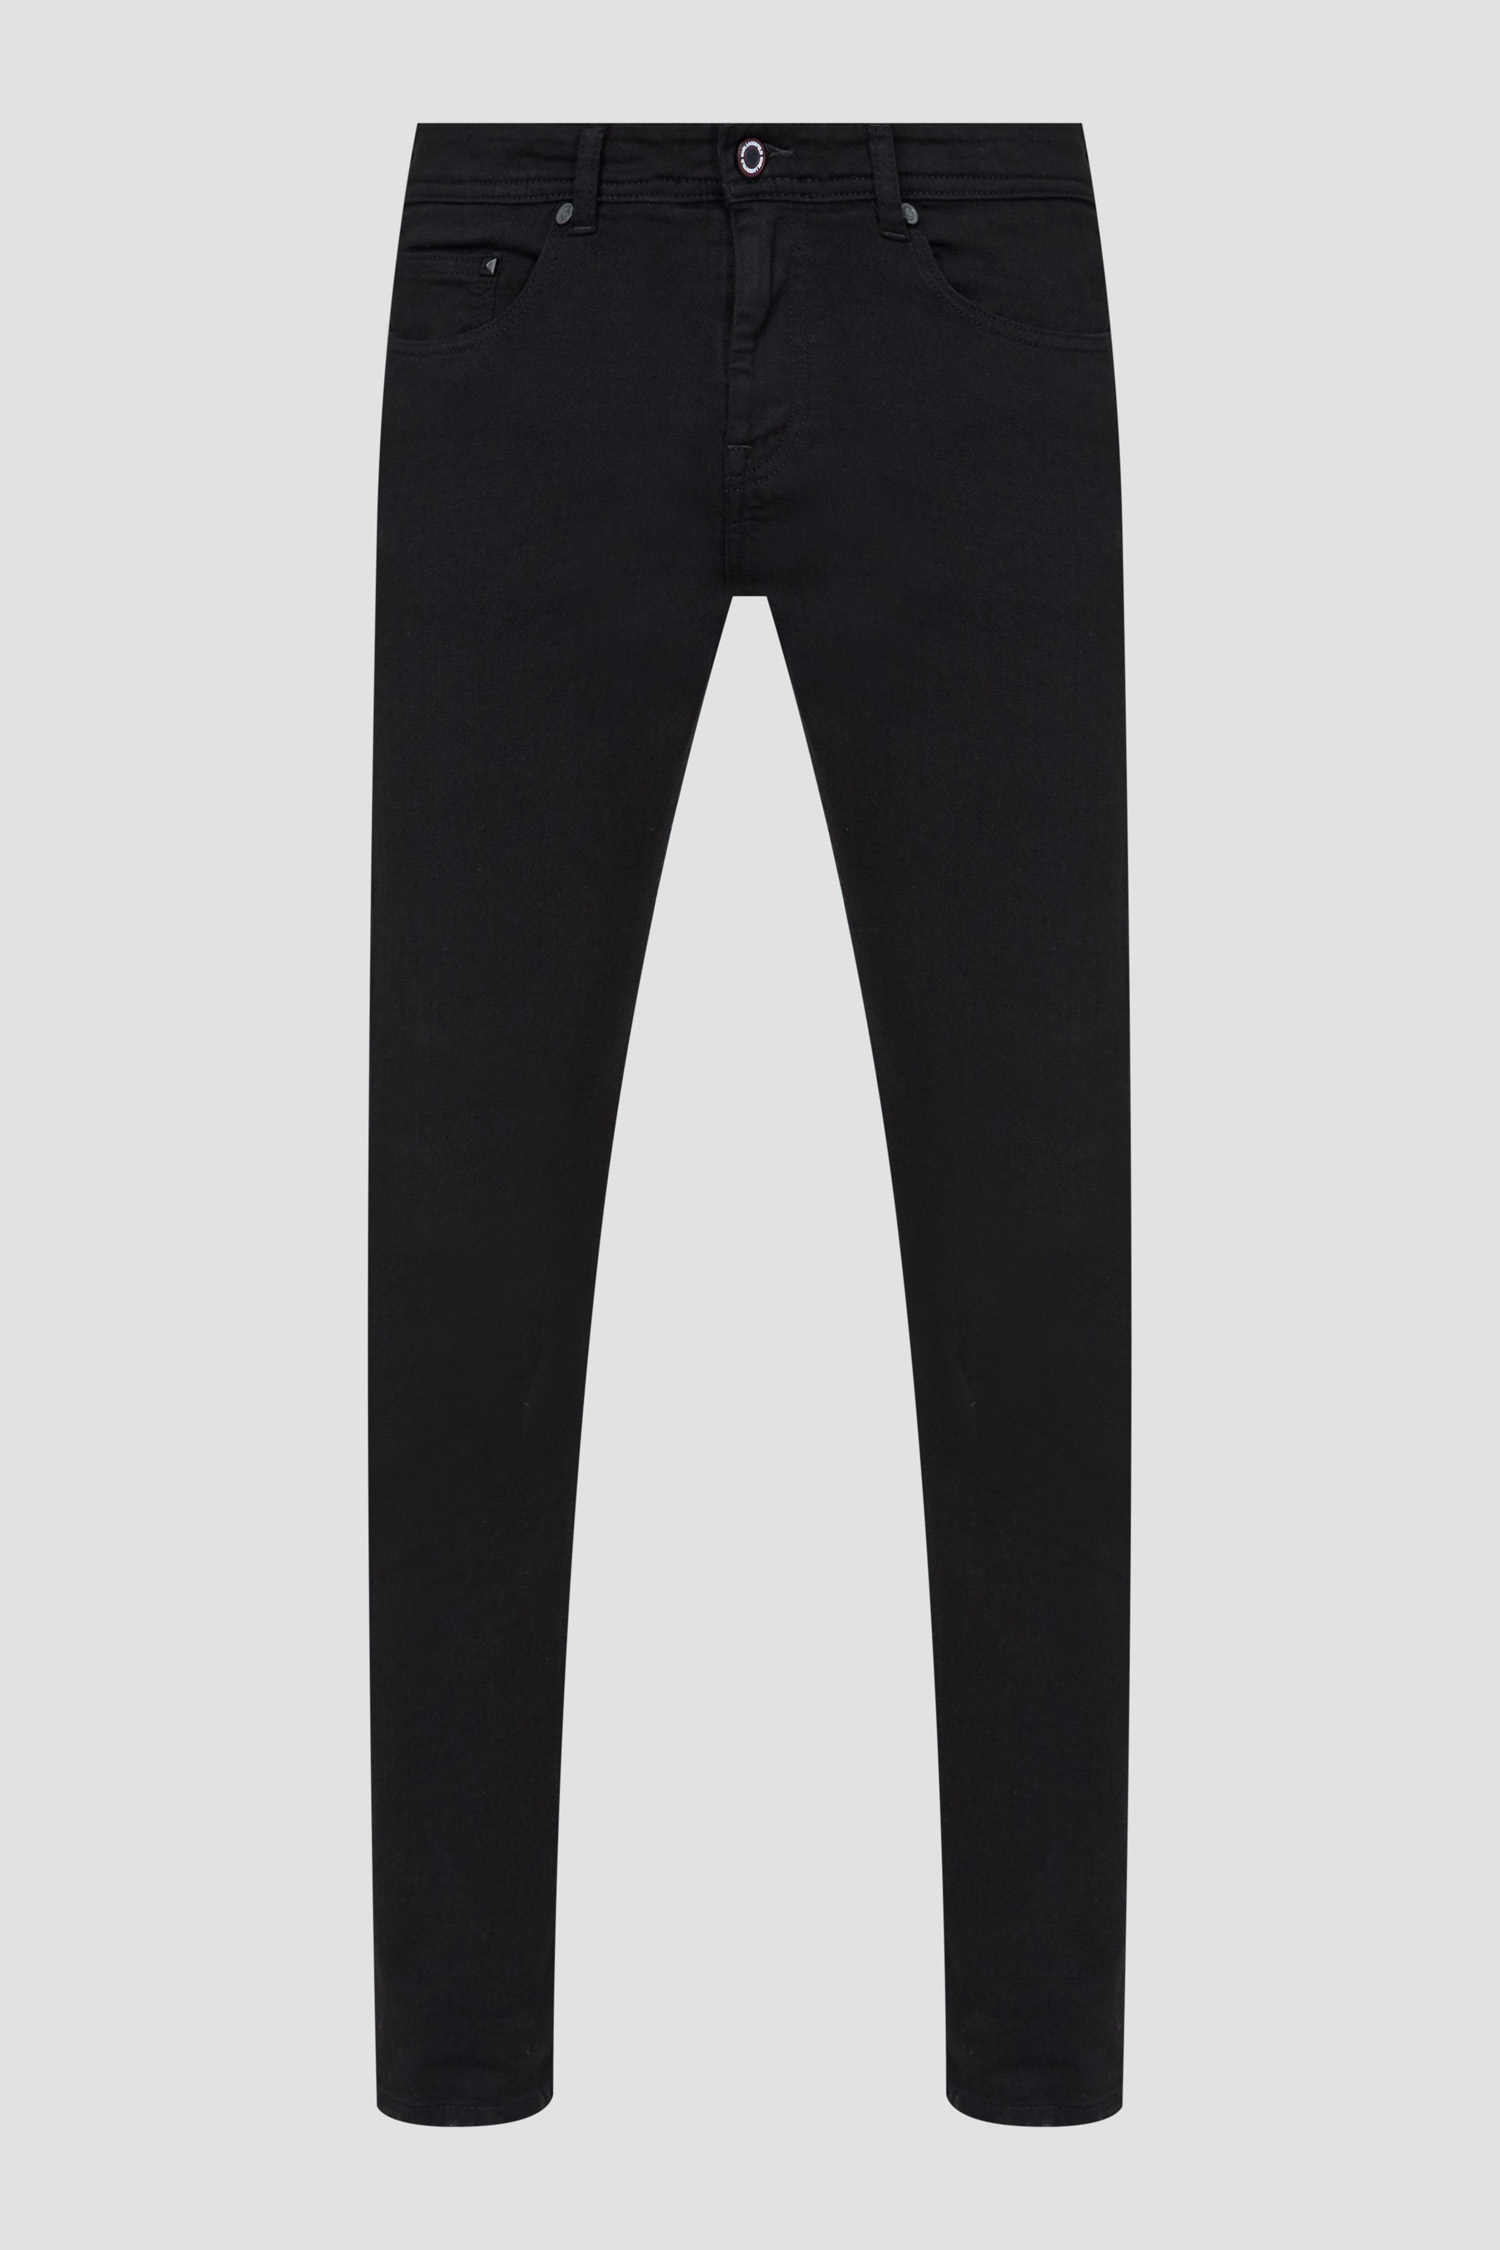 Мужские черные джинсы Karl Lagerfeld 541862.265840;931